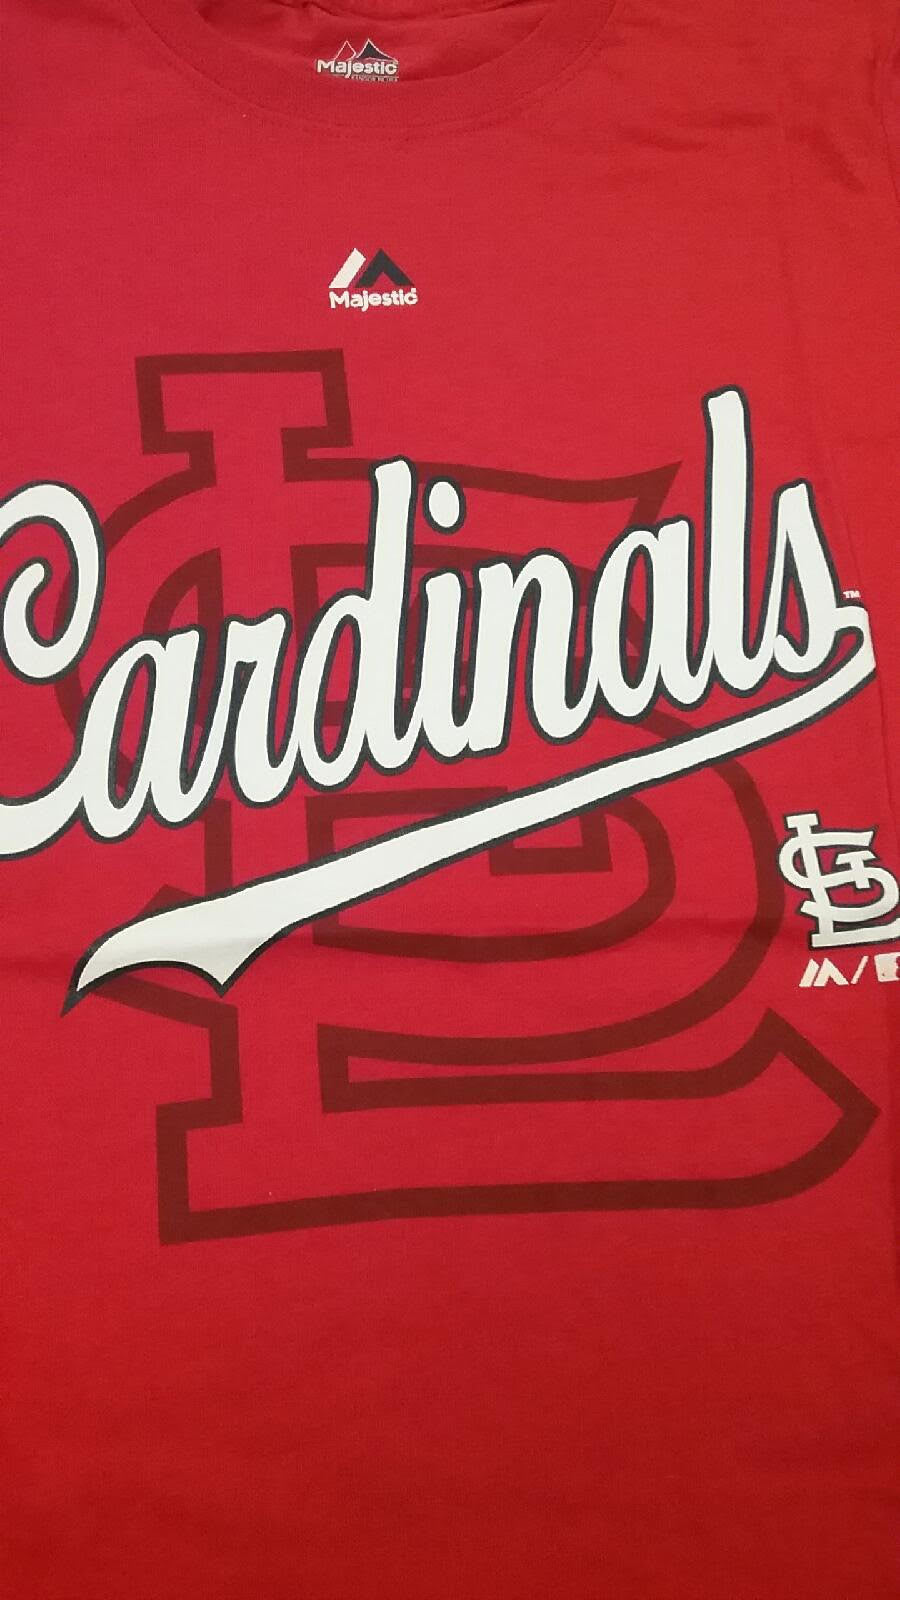 stl cardinals shirts sale